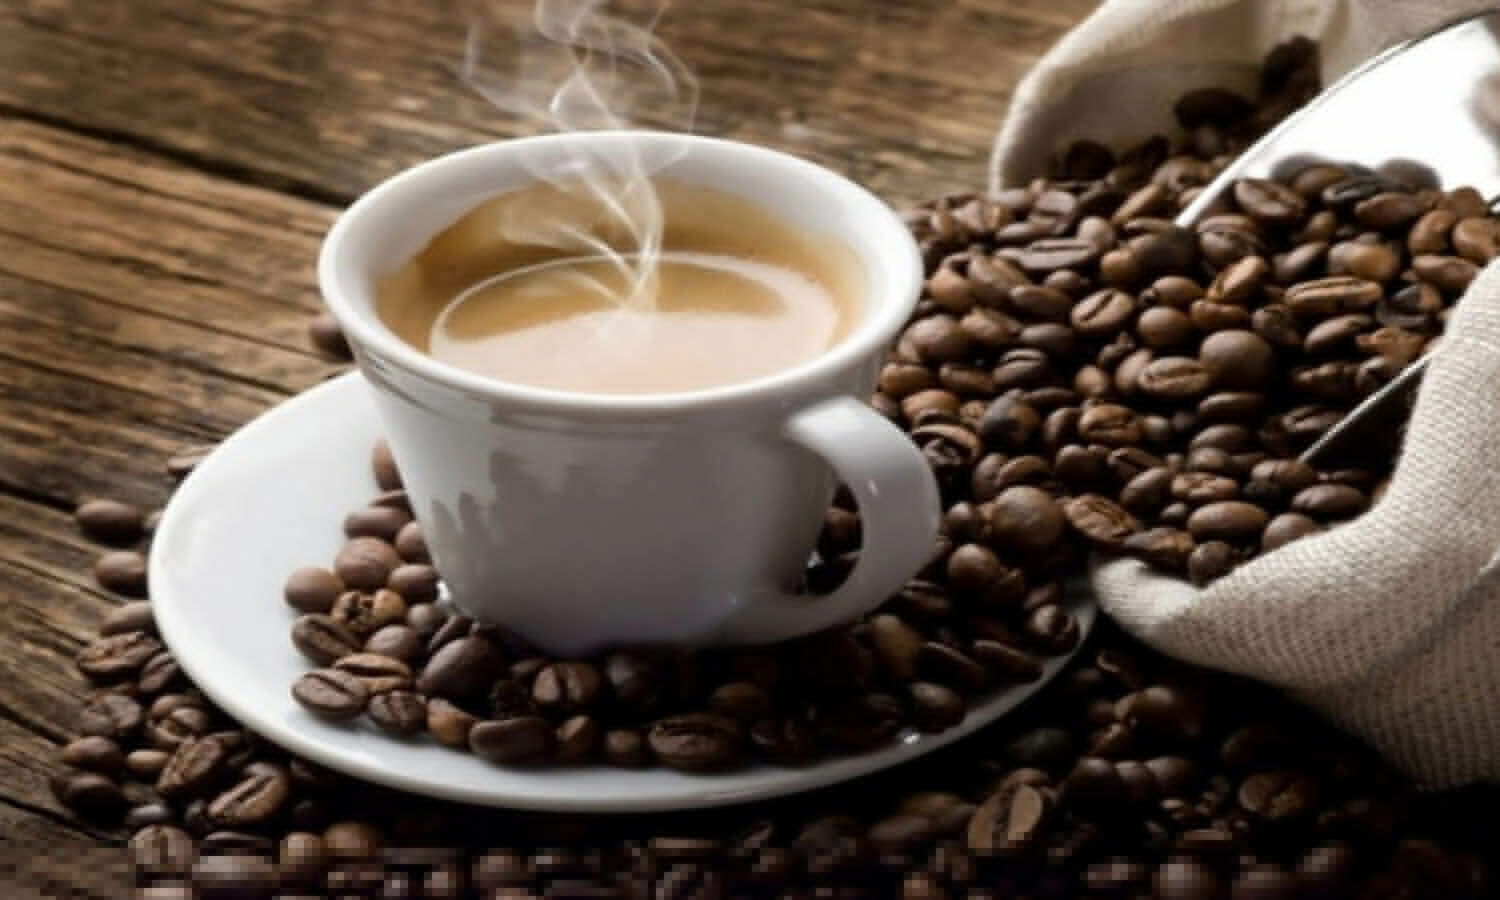 Caffeine Harmful Pregnant Women: Consumption of caffeine is very harmful for pregnant women